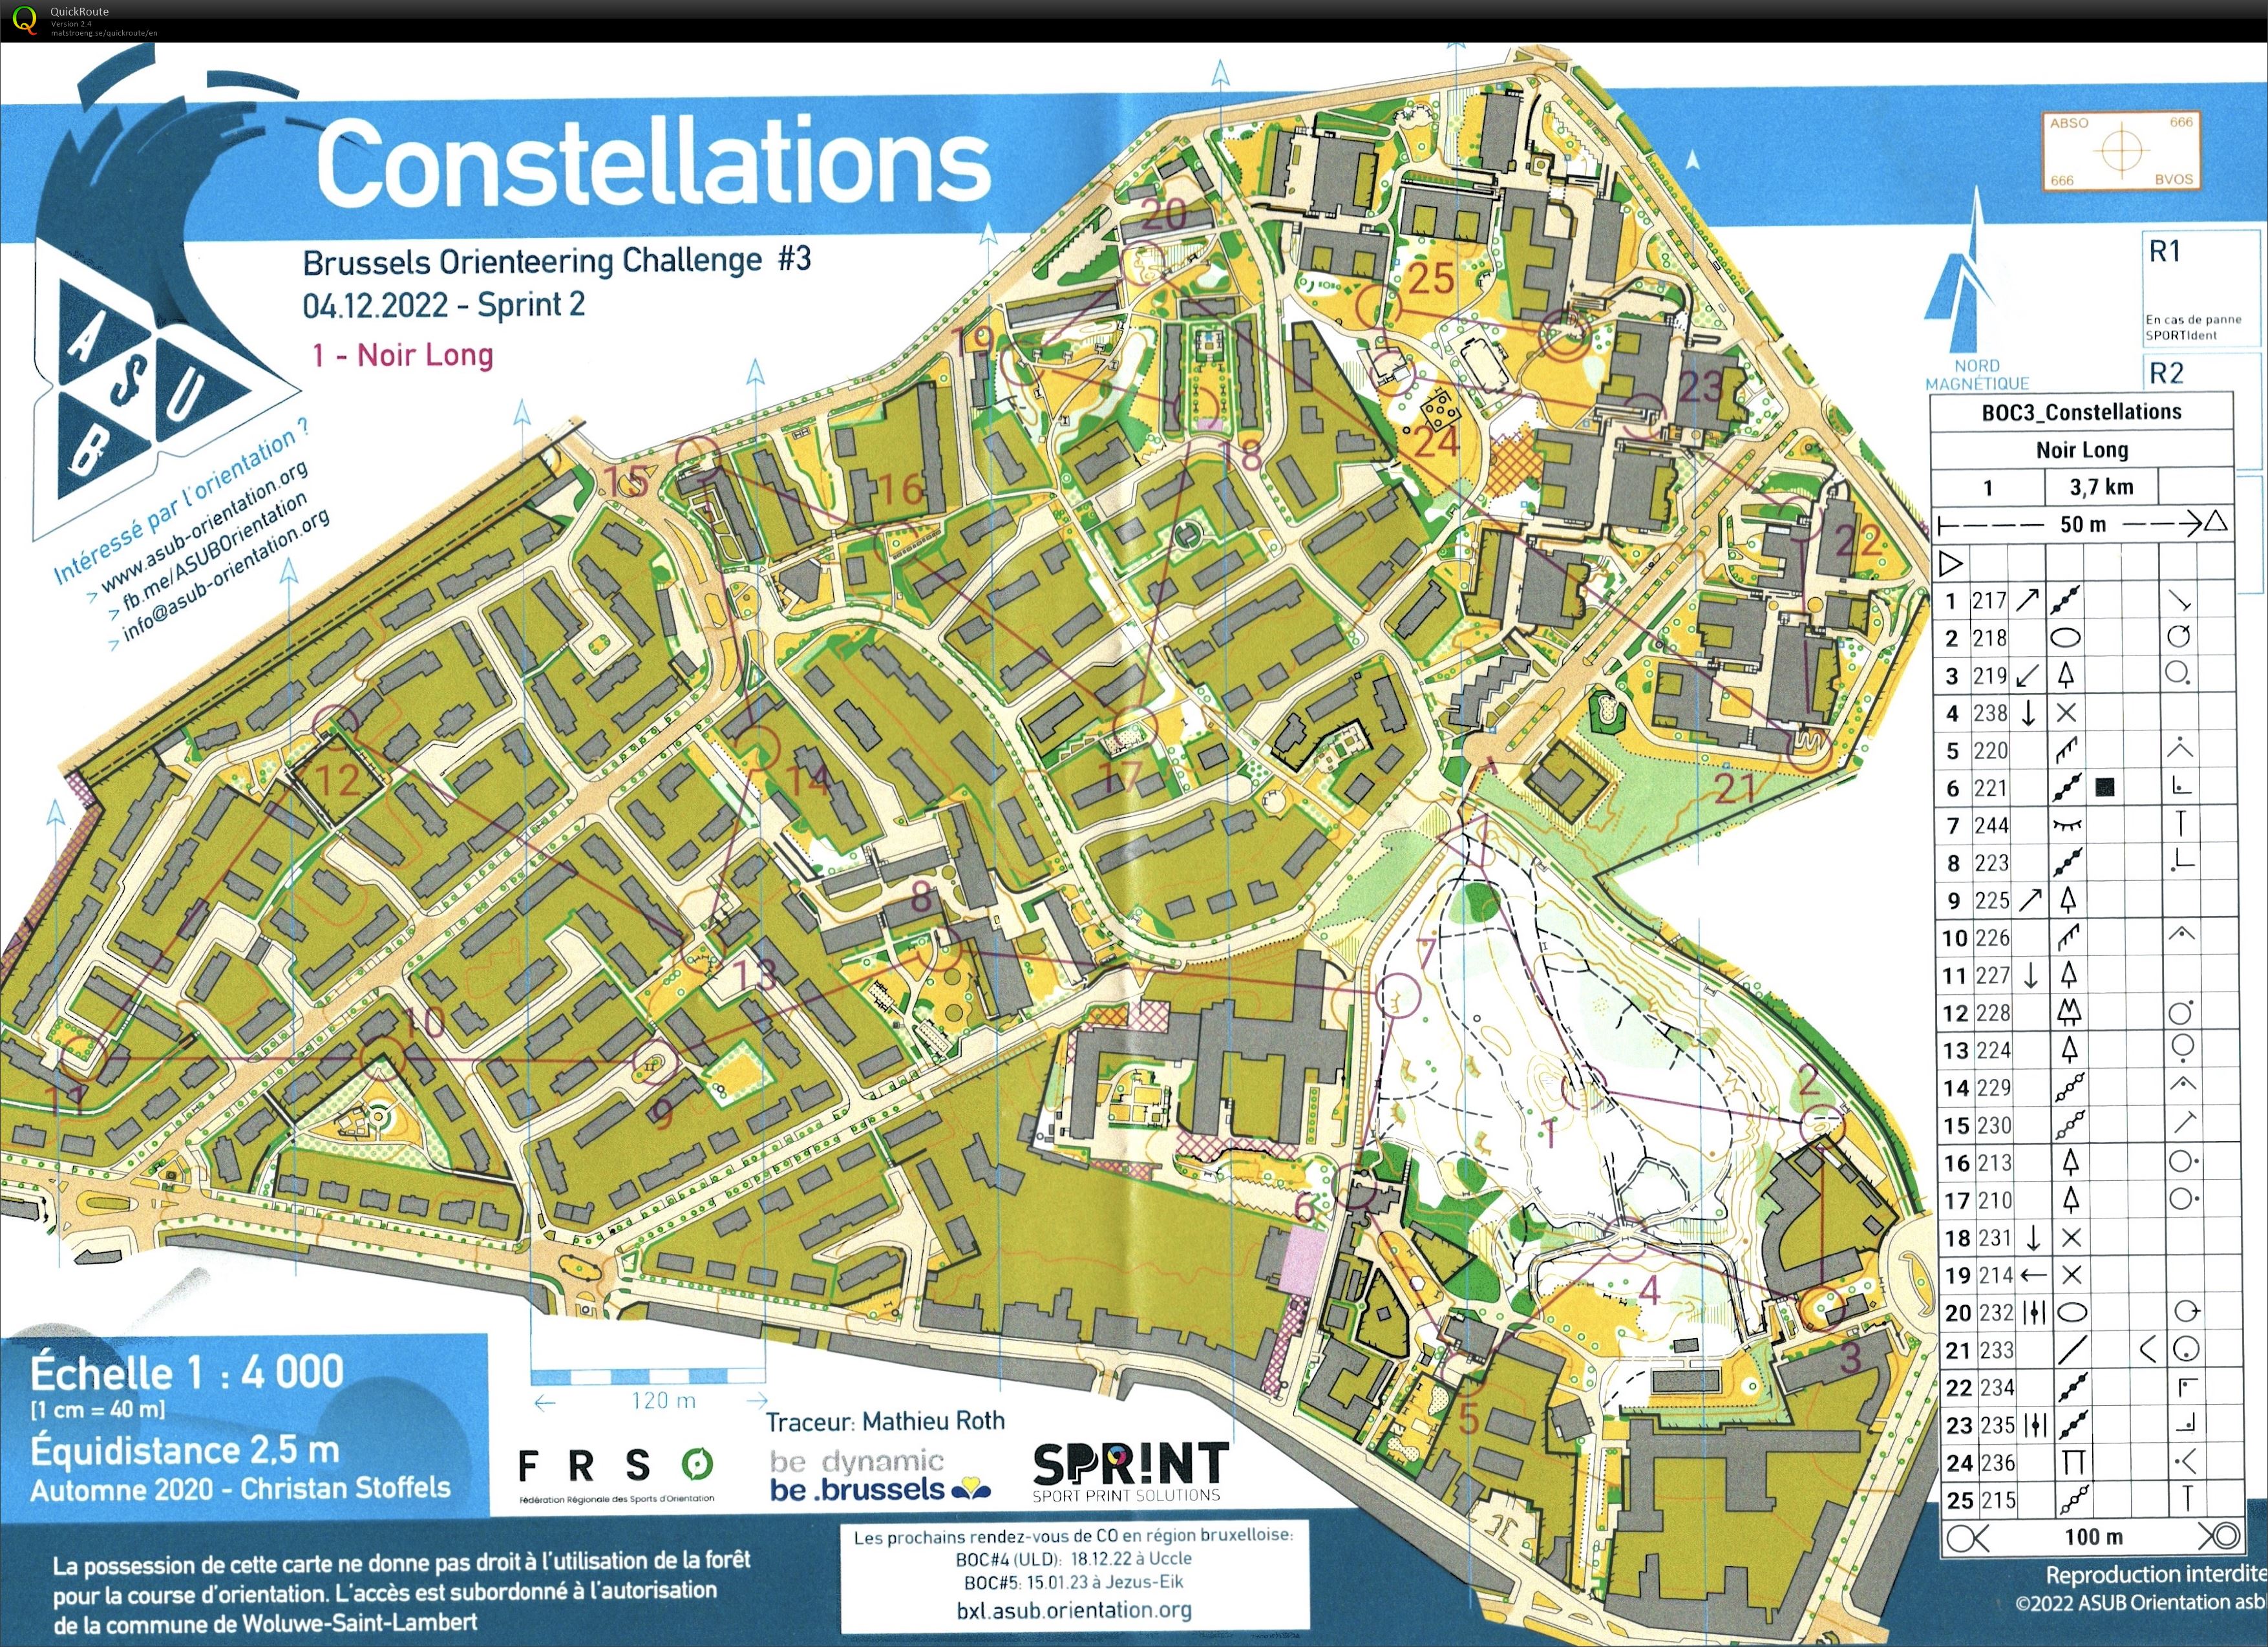 Brussels Orienteering Challenge #3 - Sprint 2 - Constellations (04/12/2022)